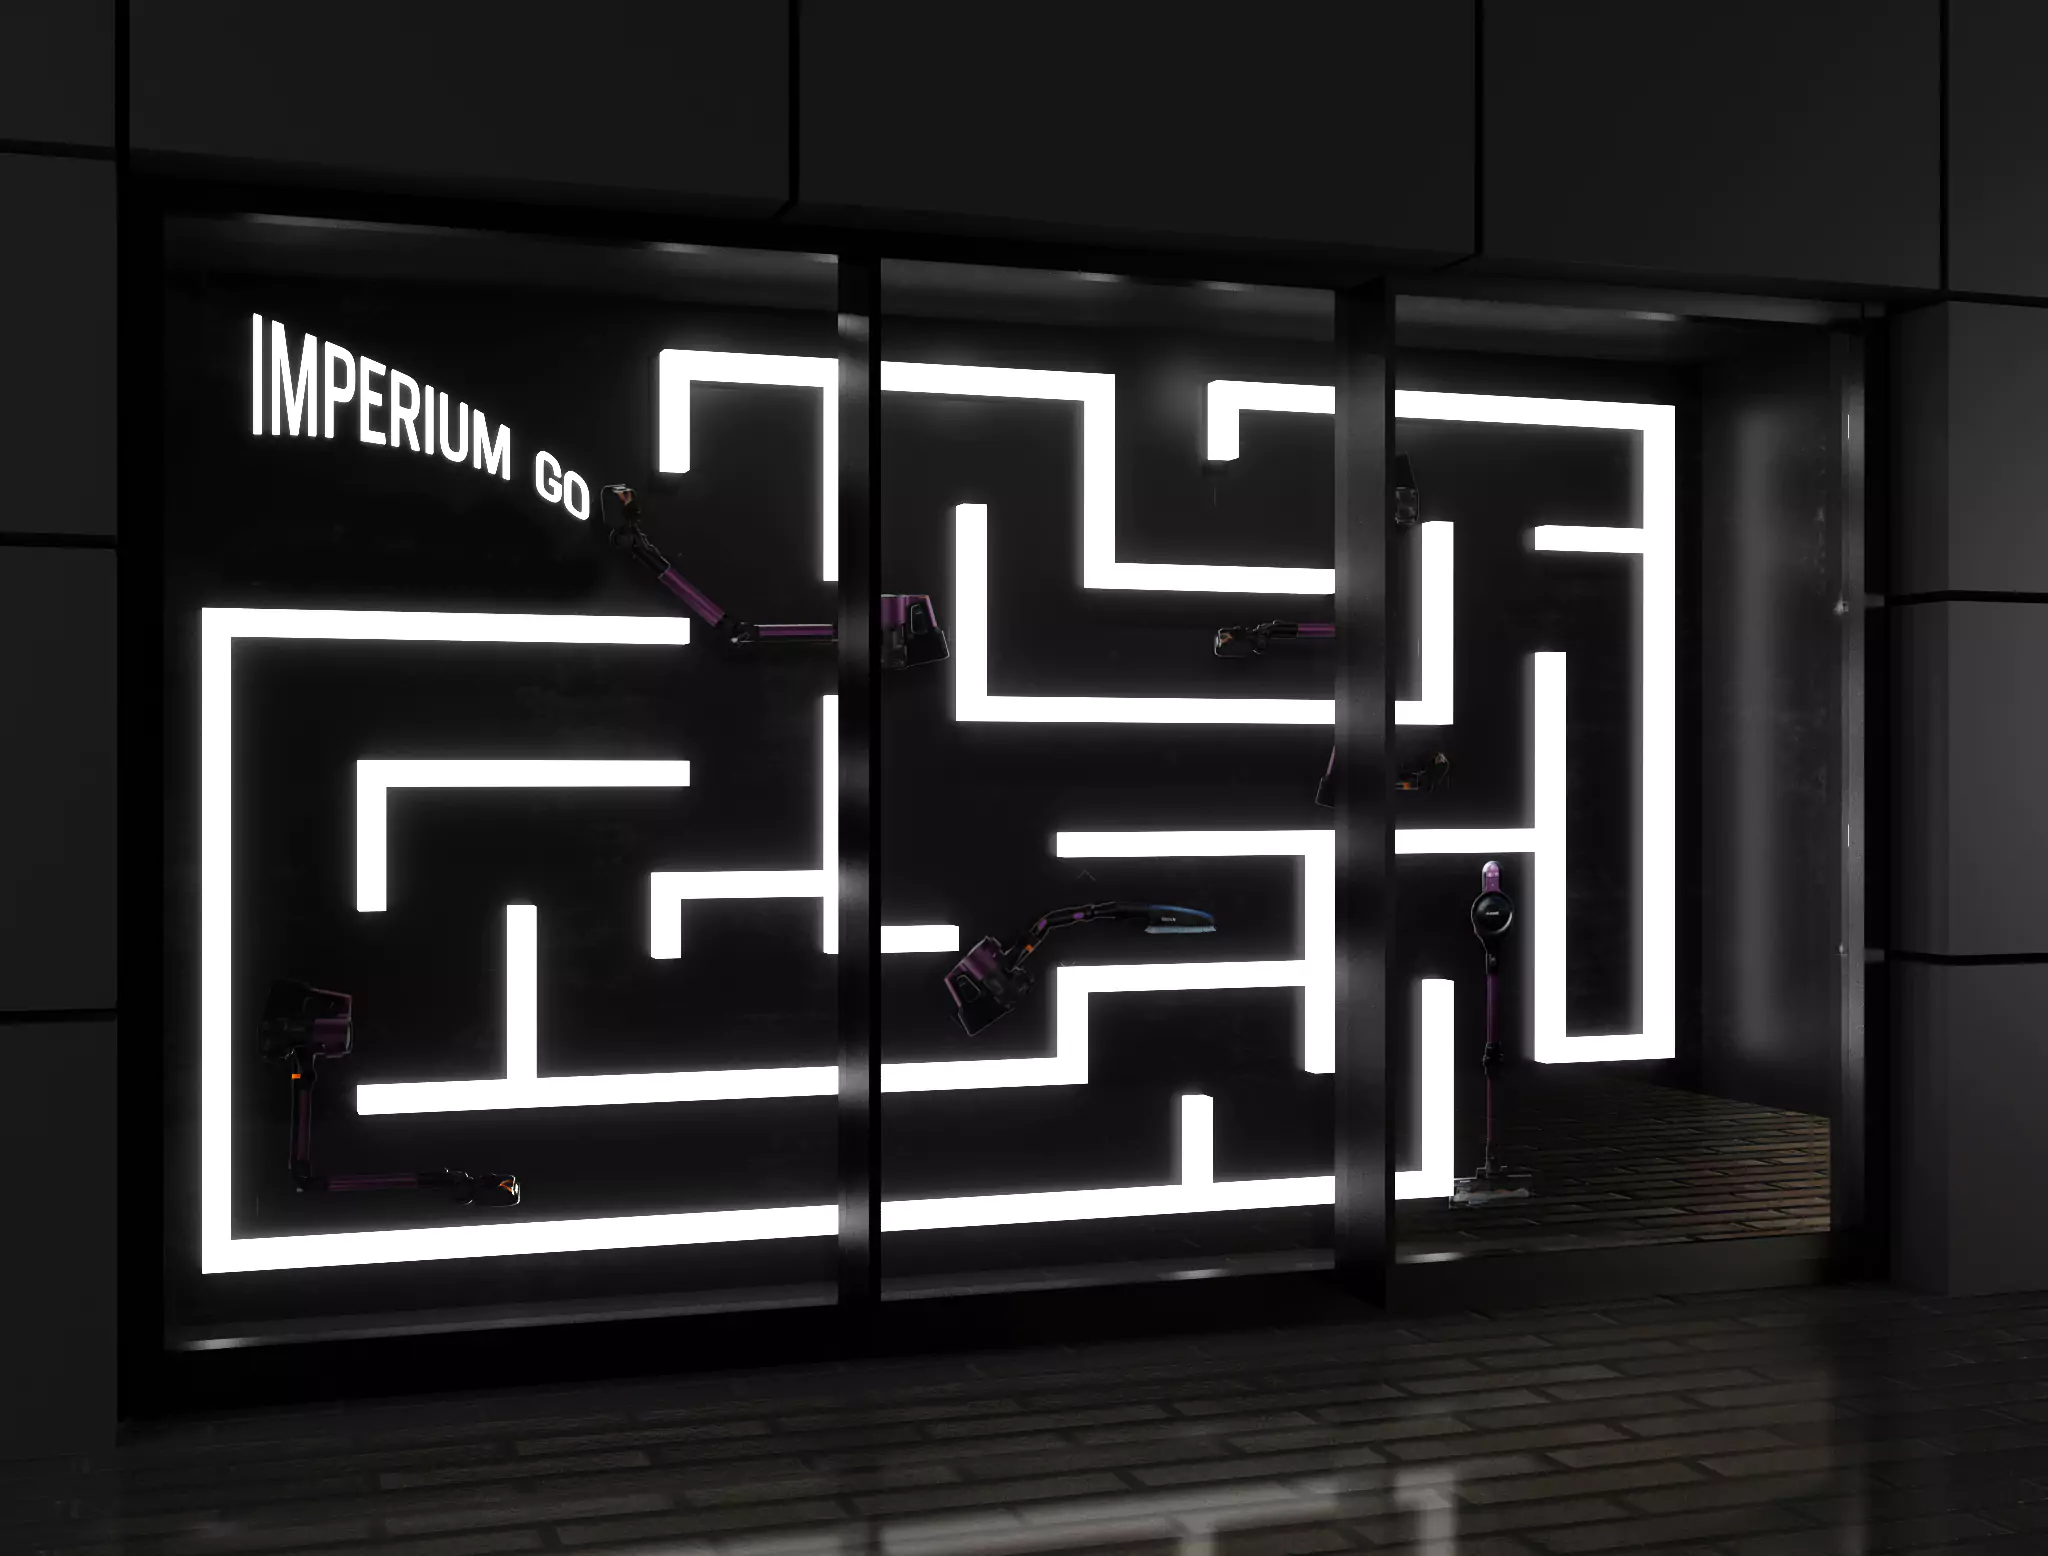 Imperium Go Product Launch Window Campaign